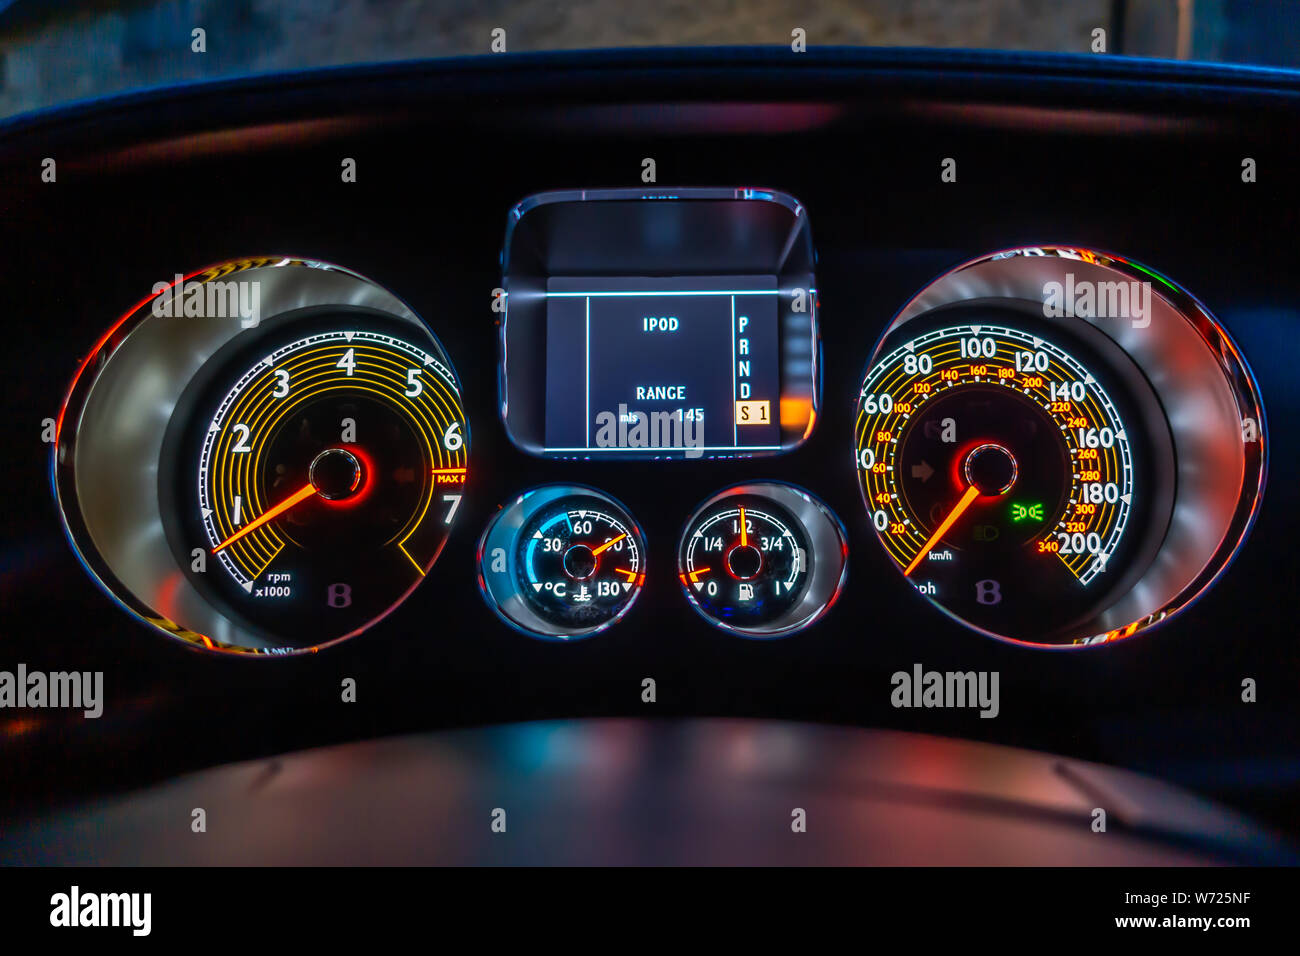 Bentley Continental Gtc Supersport Car Interior At Night Stock Photo Alamy